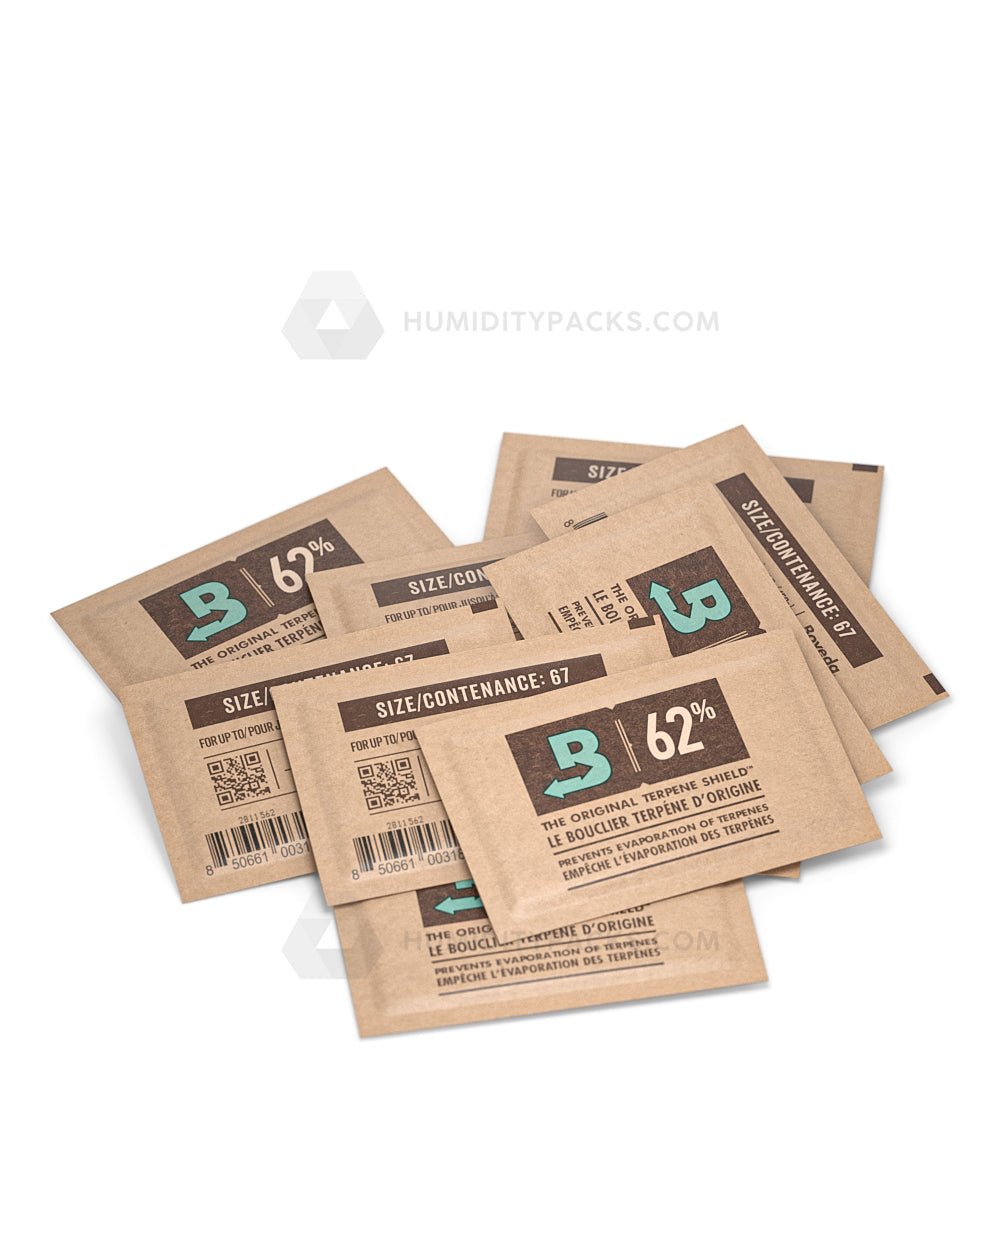 Boveda 2-Way Humidity Control Packets - Bulk 100 Pack